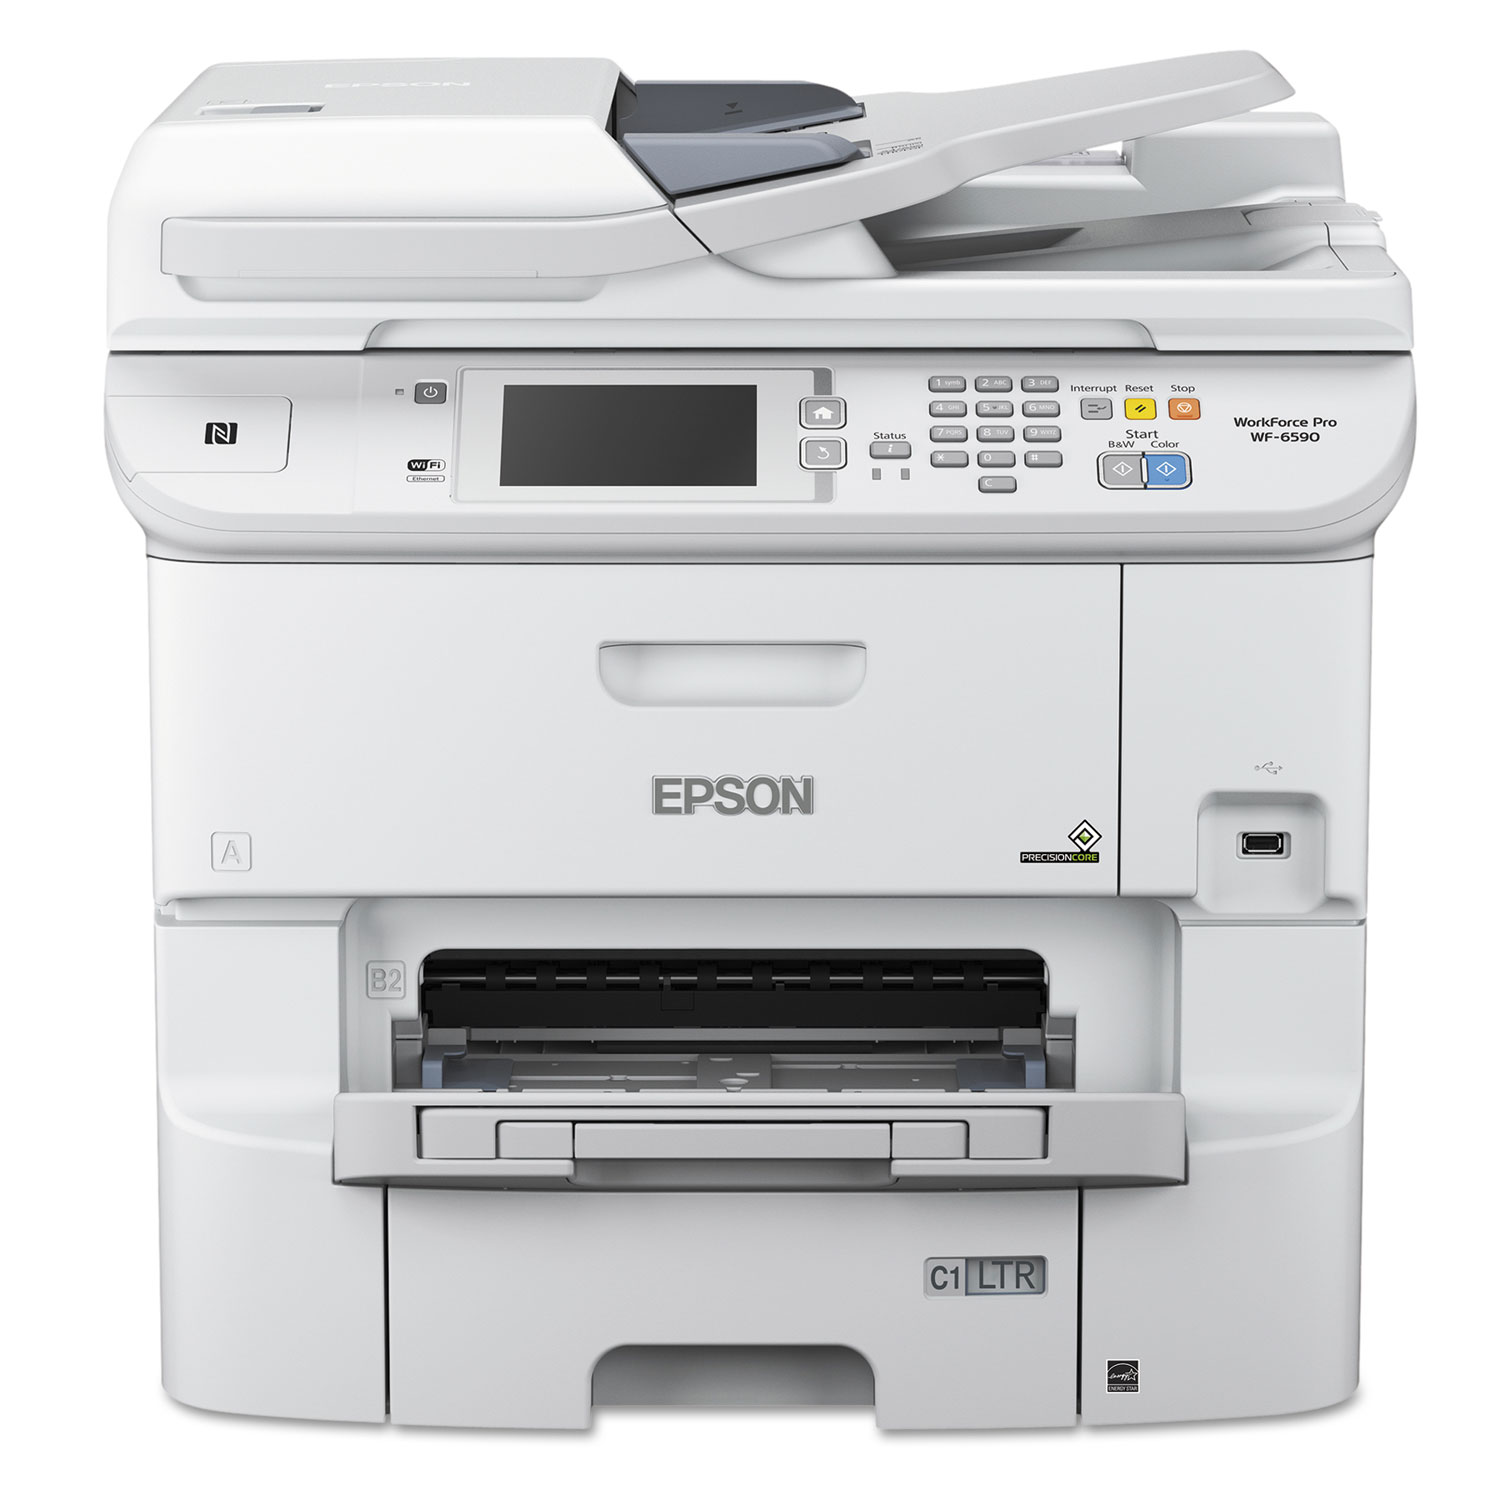  Epson C11CD49201 WorkForce Pro WF-6590 Wireless Multifunction Color Printer, Copy/Fax/Print/Scan (EPSC11CD49201NA) 